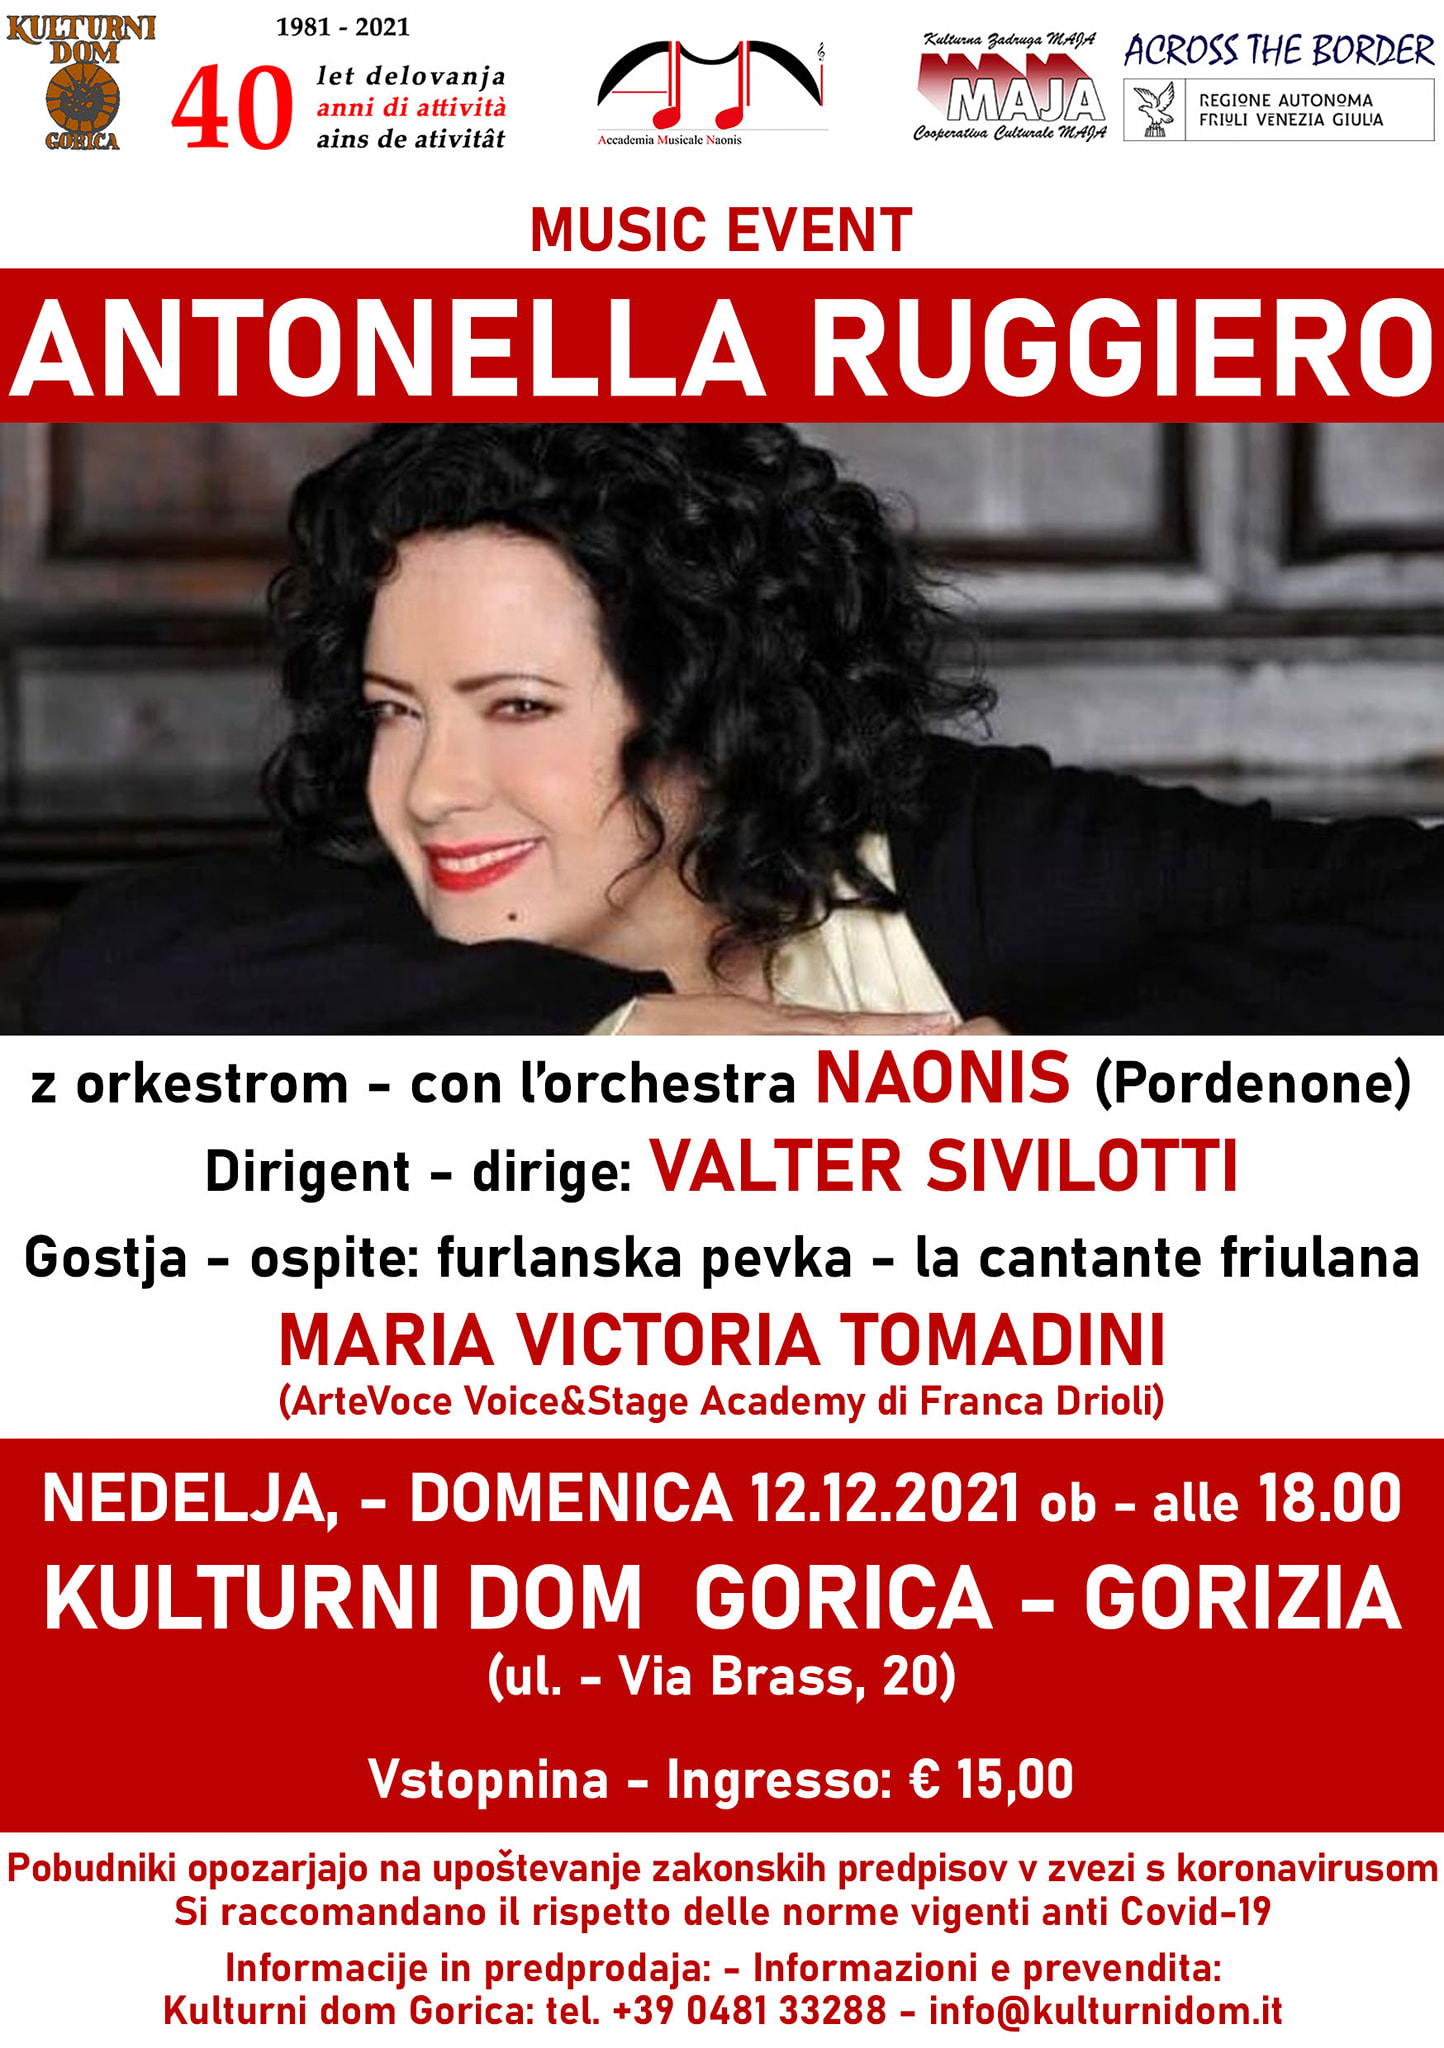 Antonella Ruggiero & Naonis Orchestra